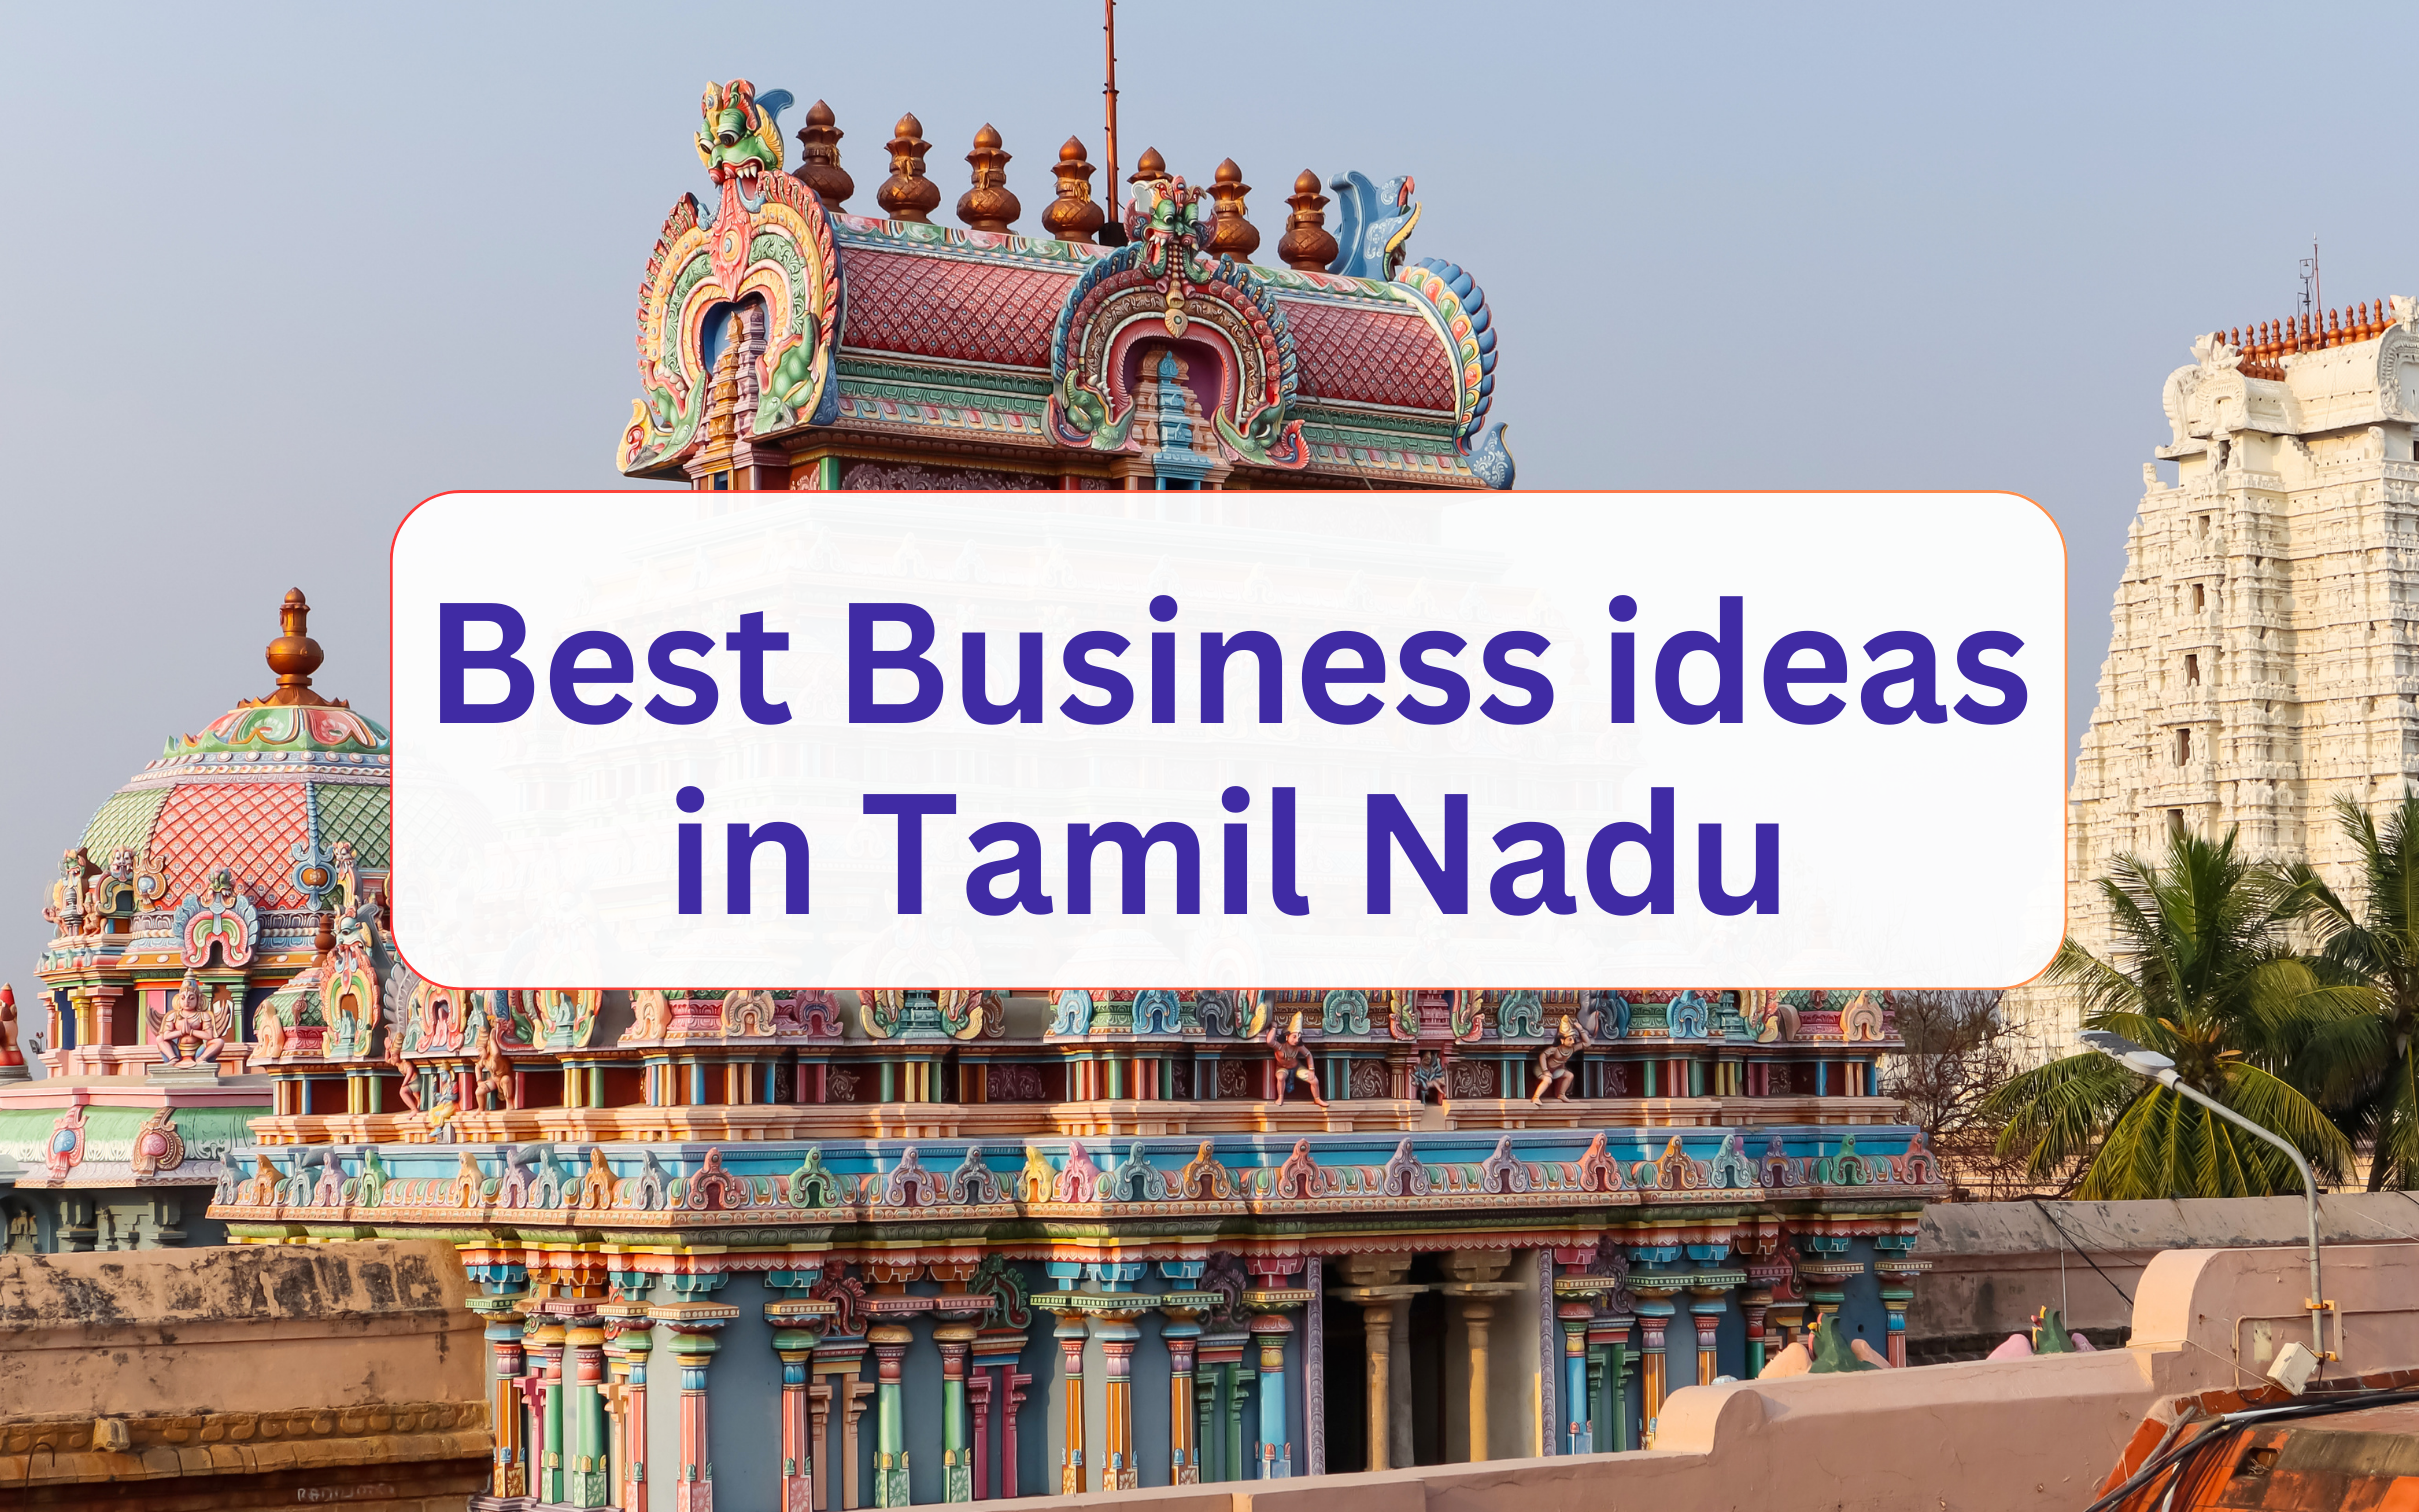 Business ideas in Tamil Nadu